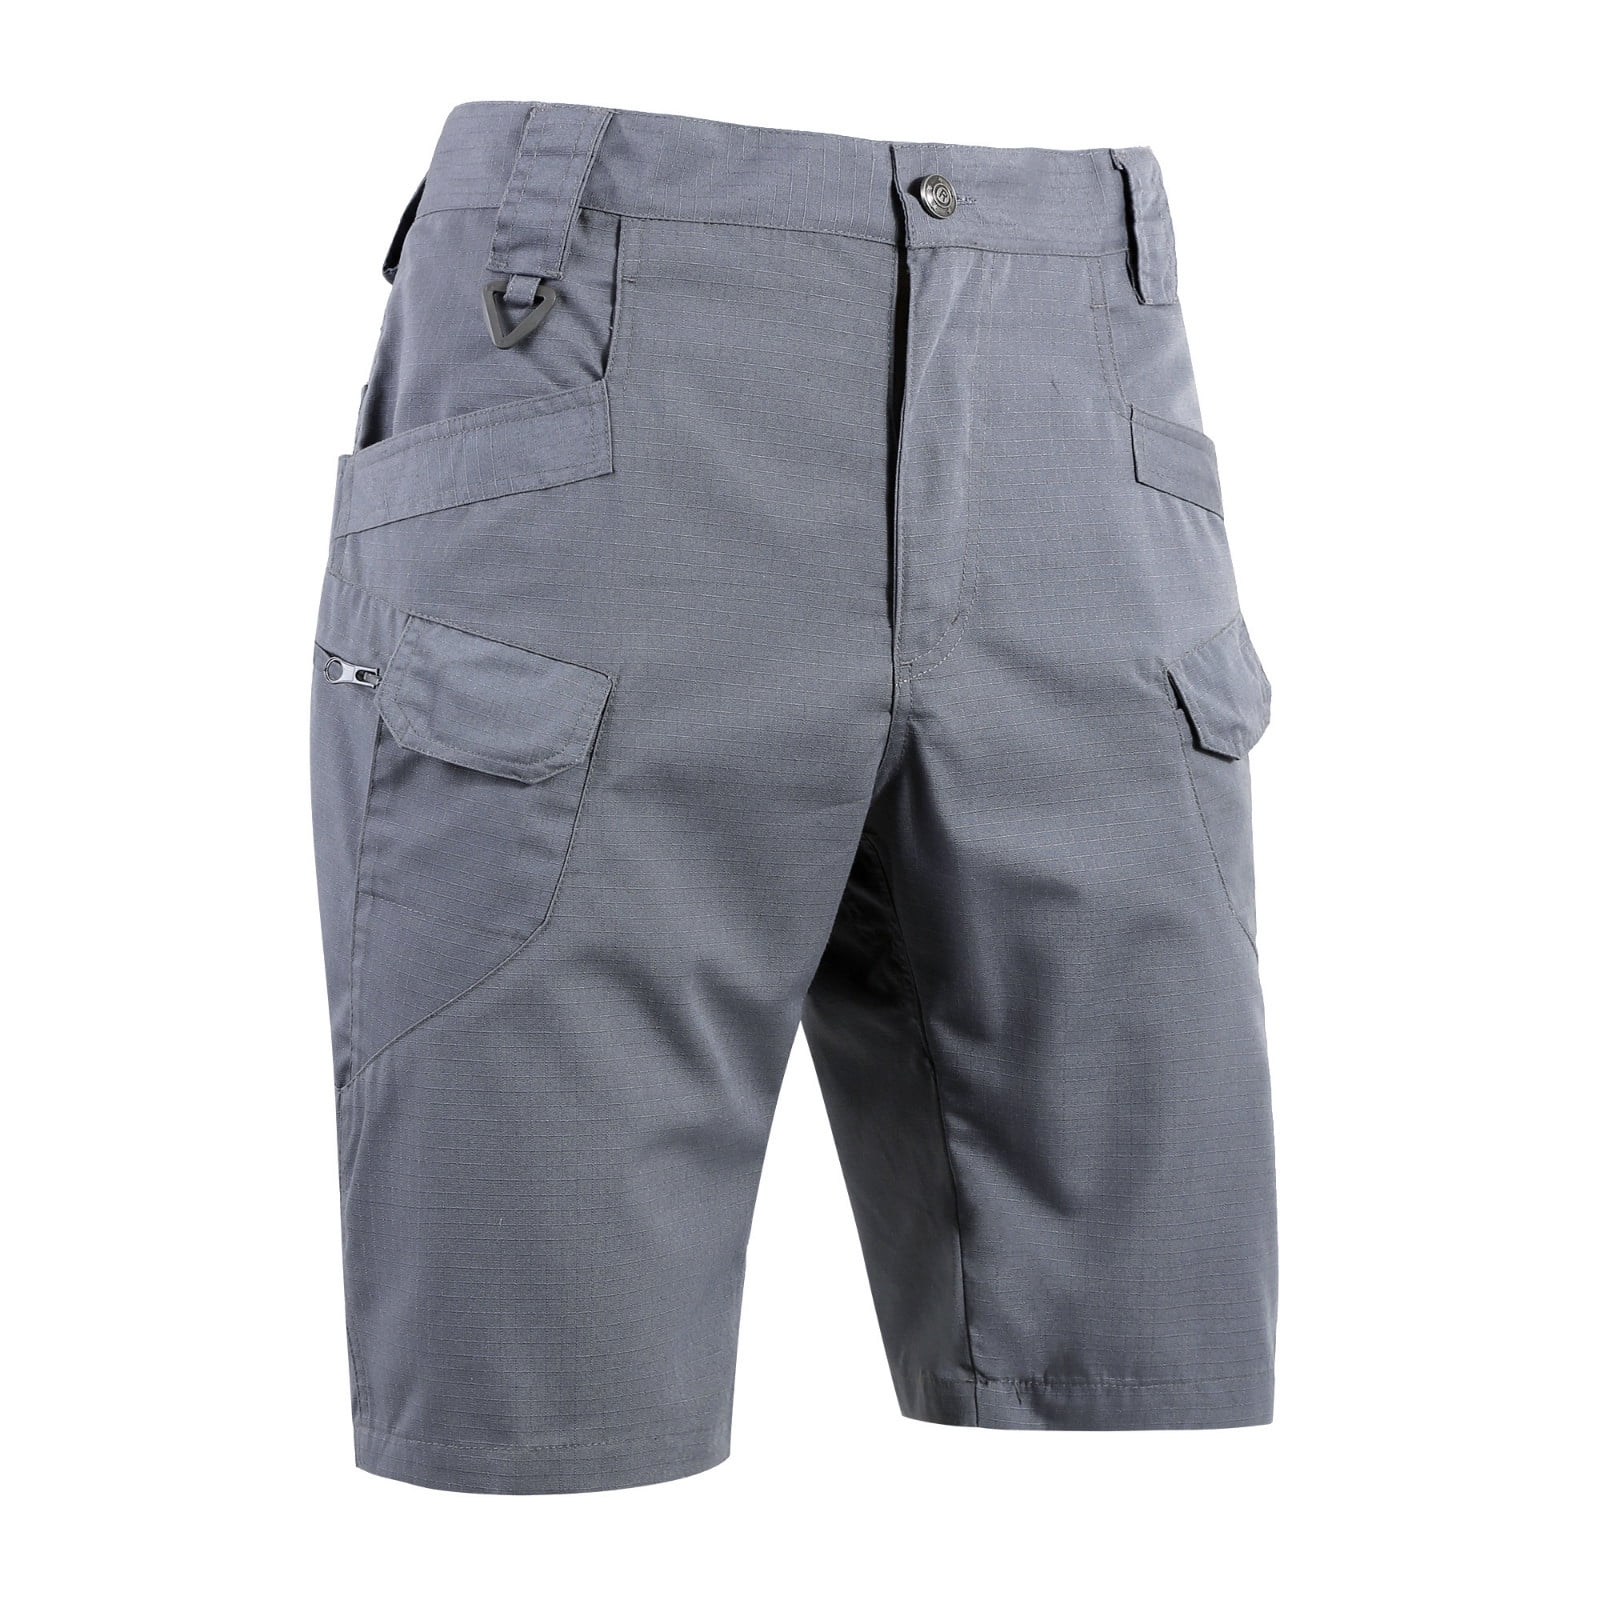 Zeceouar Cargo Shorts For Men With Pockets Men Hiking Fishing Cargo ...